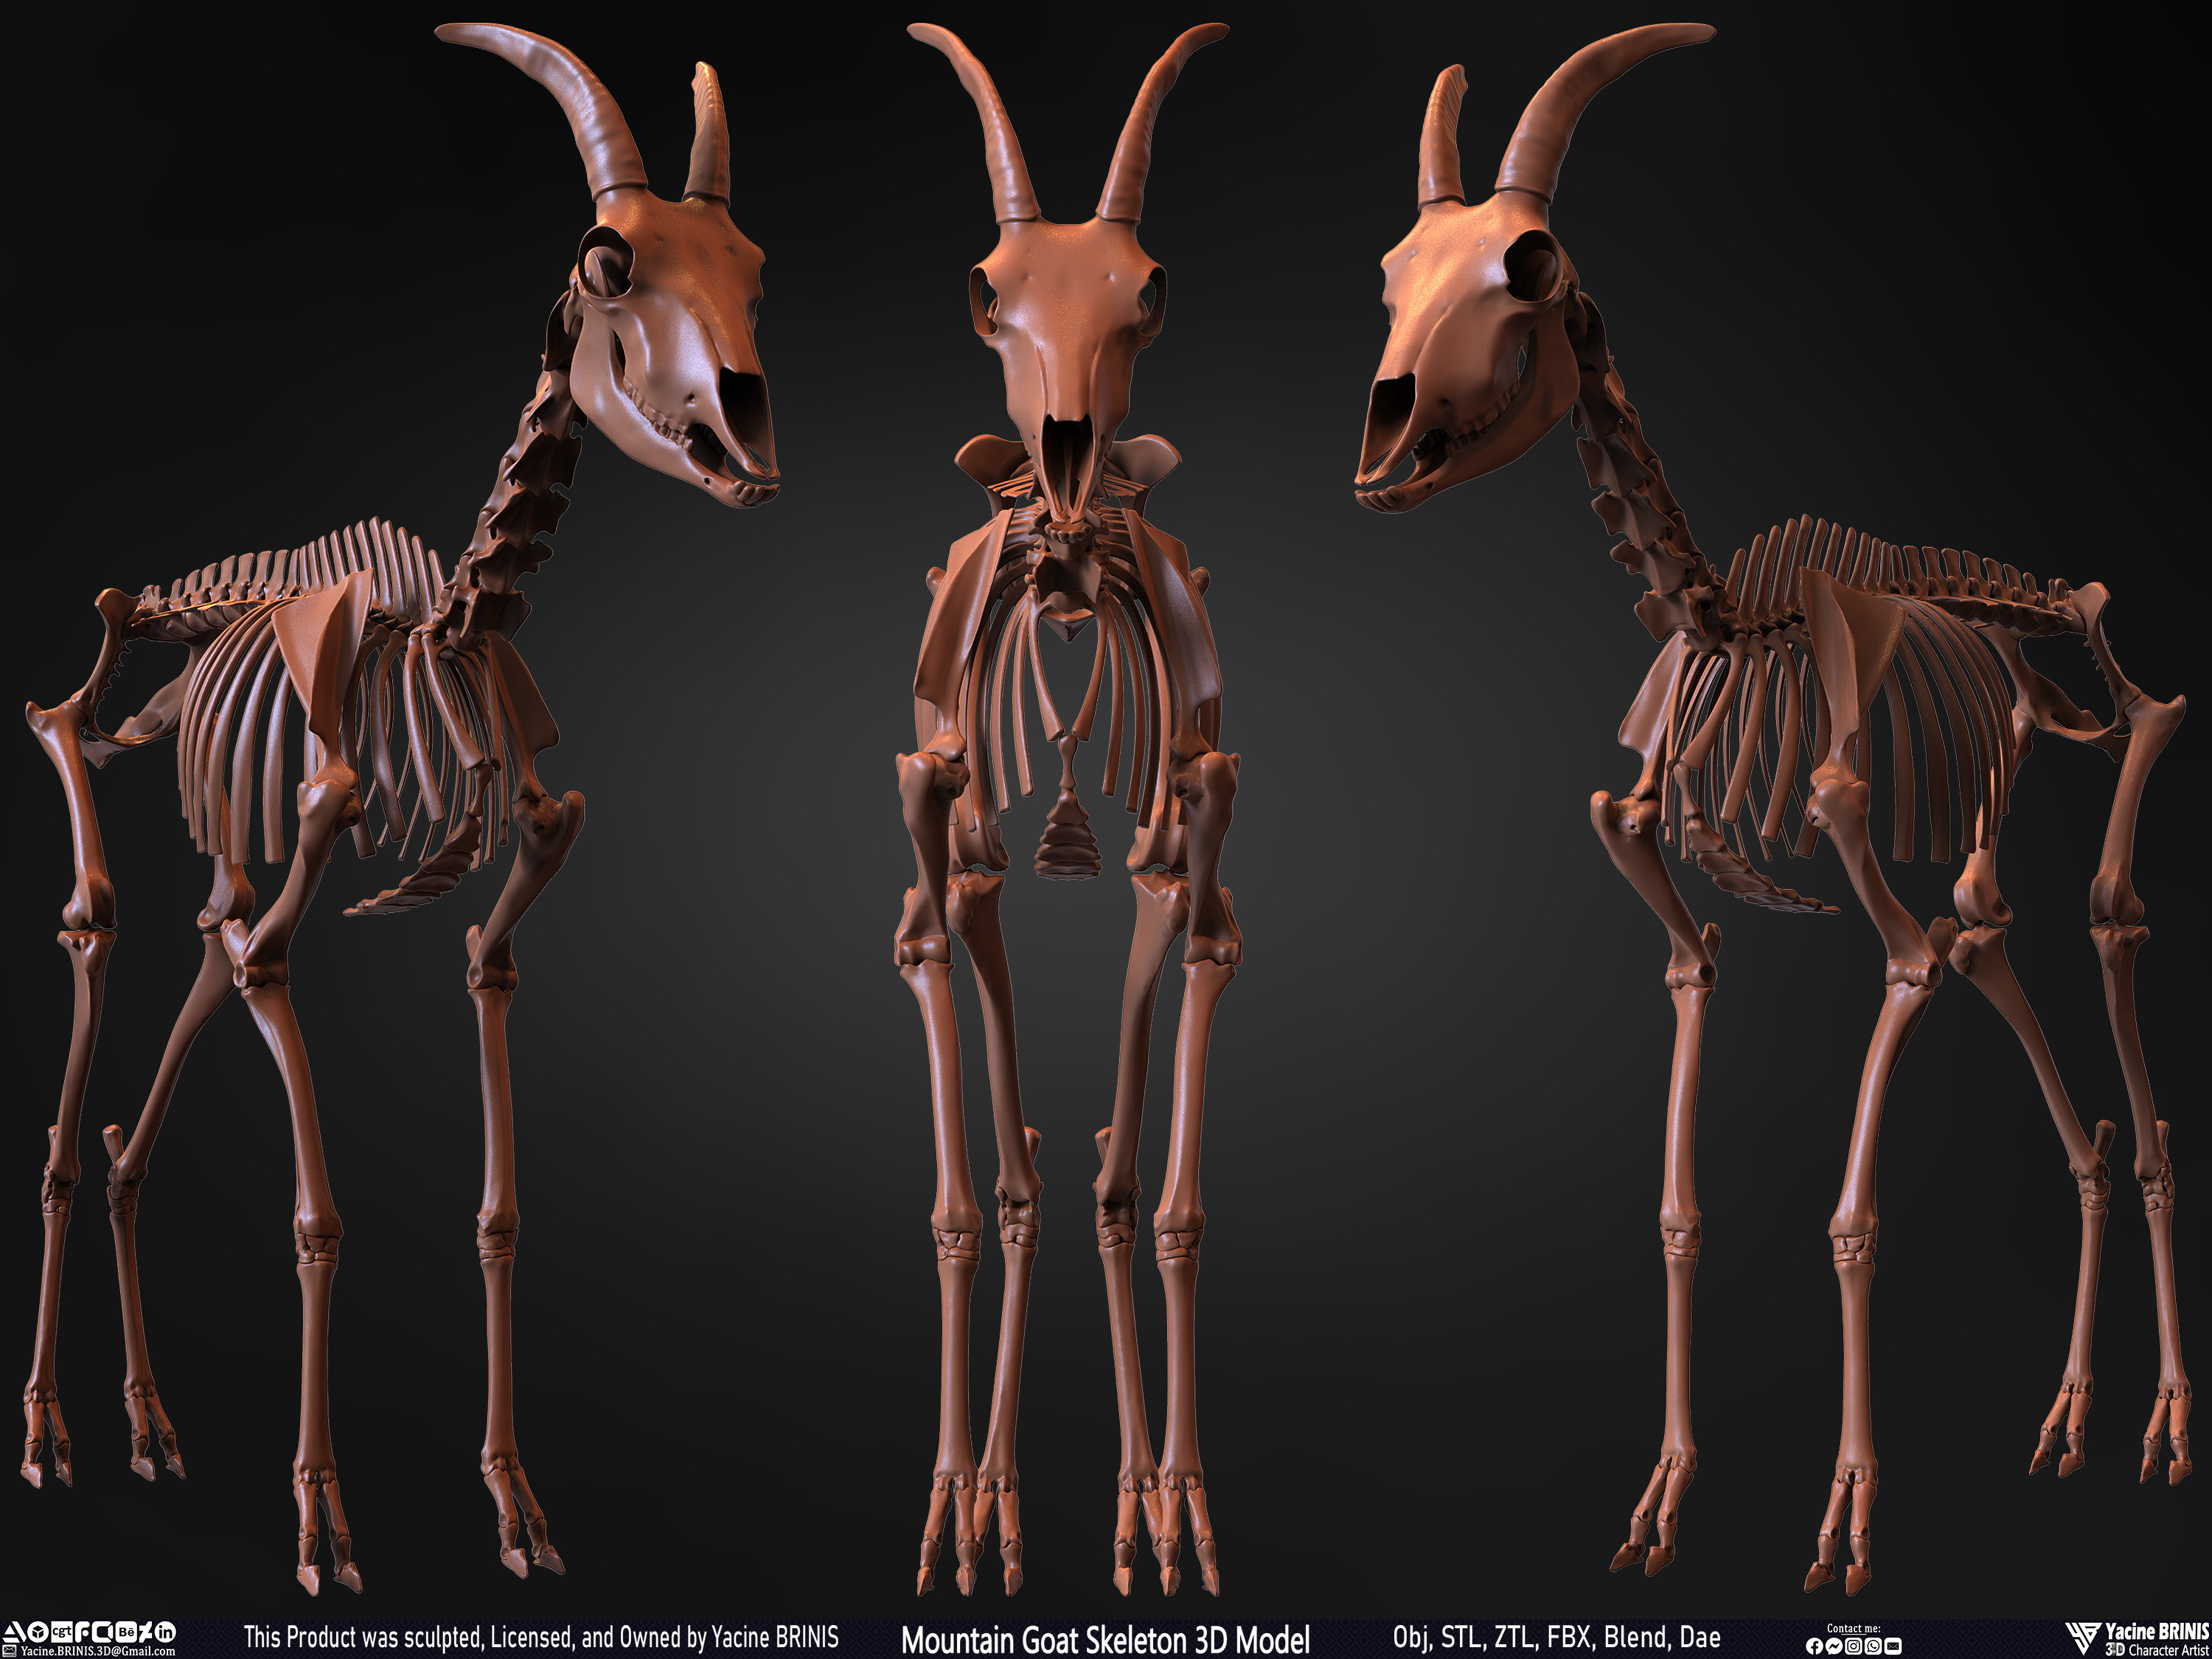 Mountain Goat Skeleton 3D Model Sculpted by Yacine BRINIS Set 033